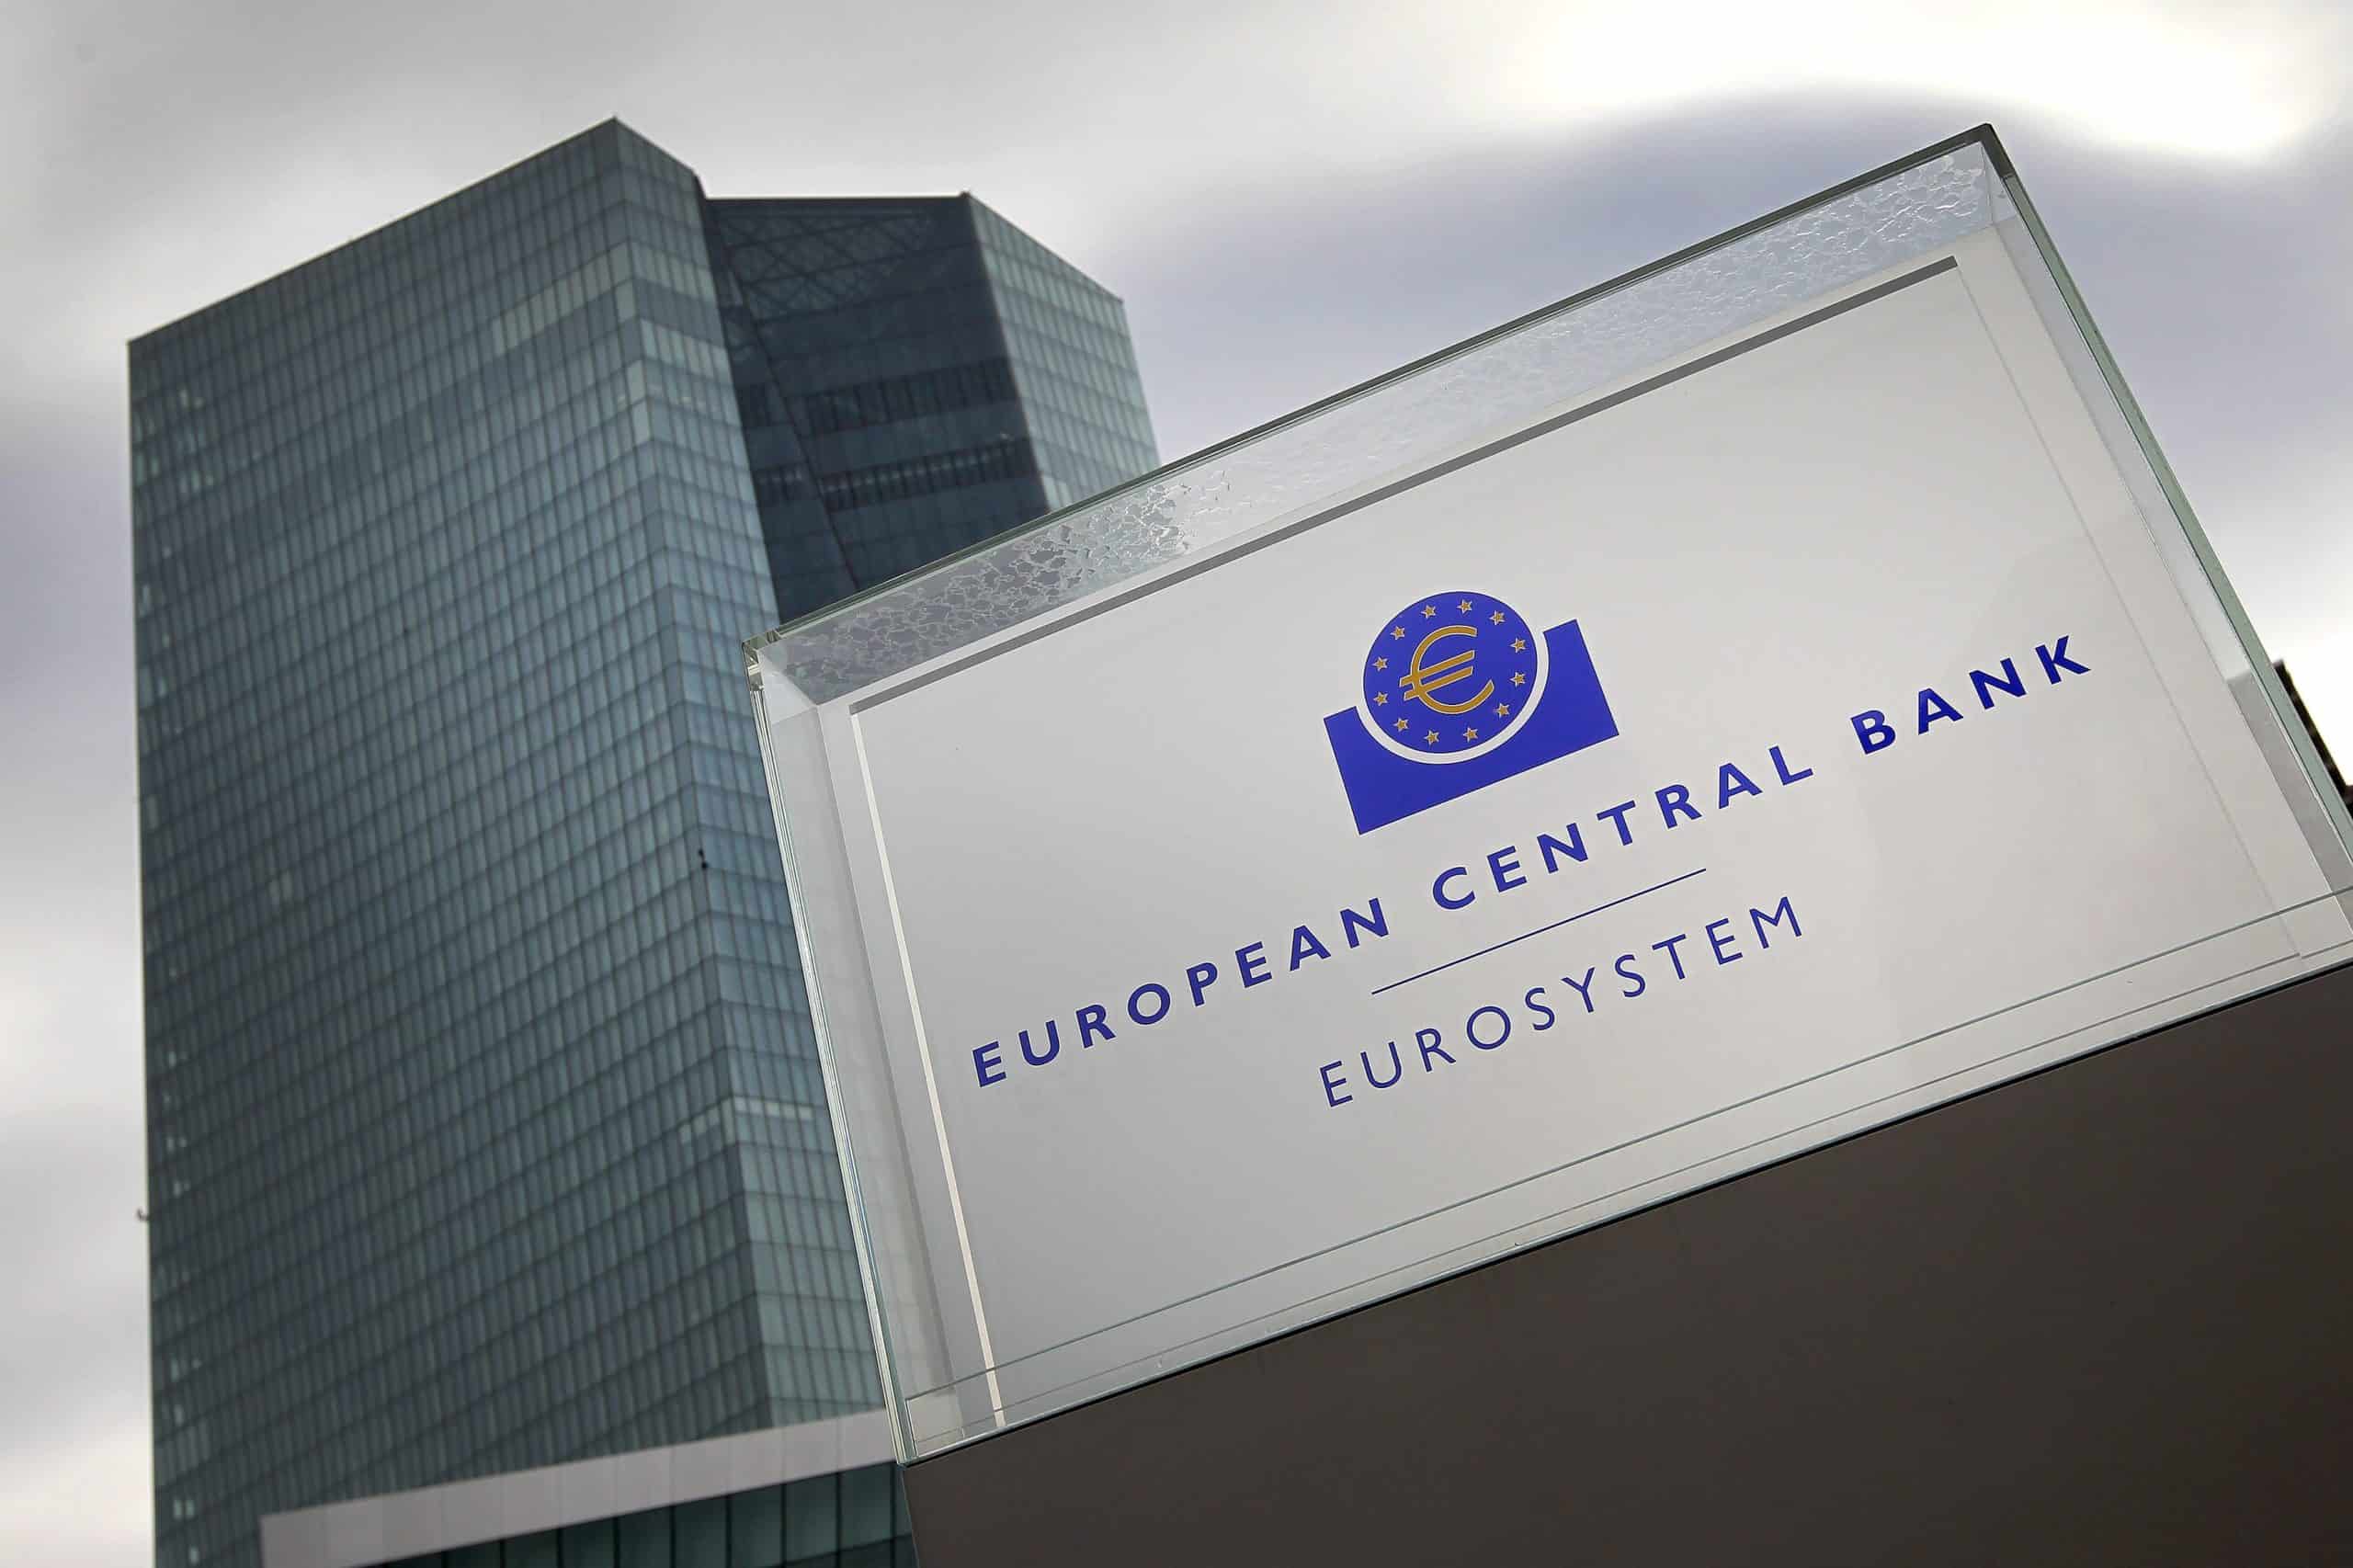 European Central Bank Building. Source: Fortune